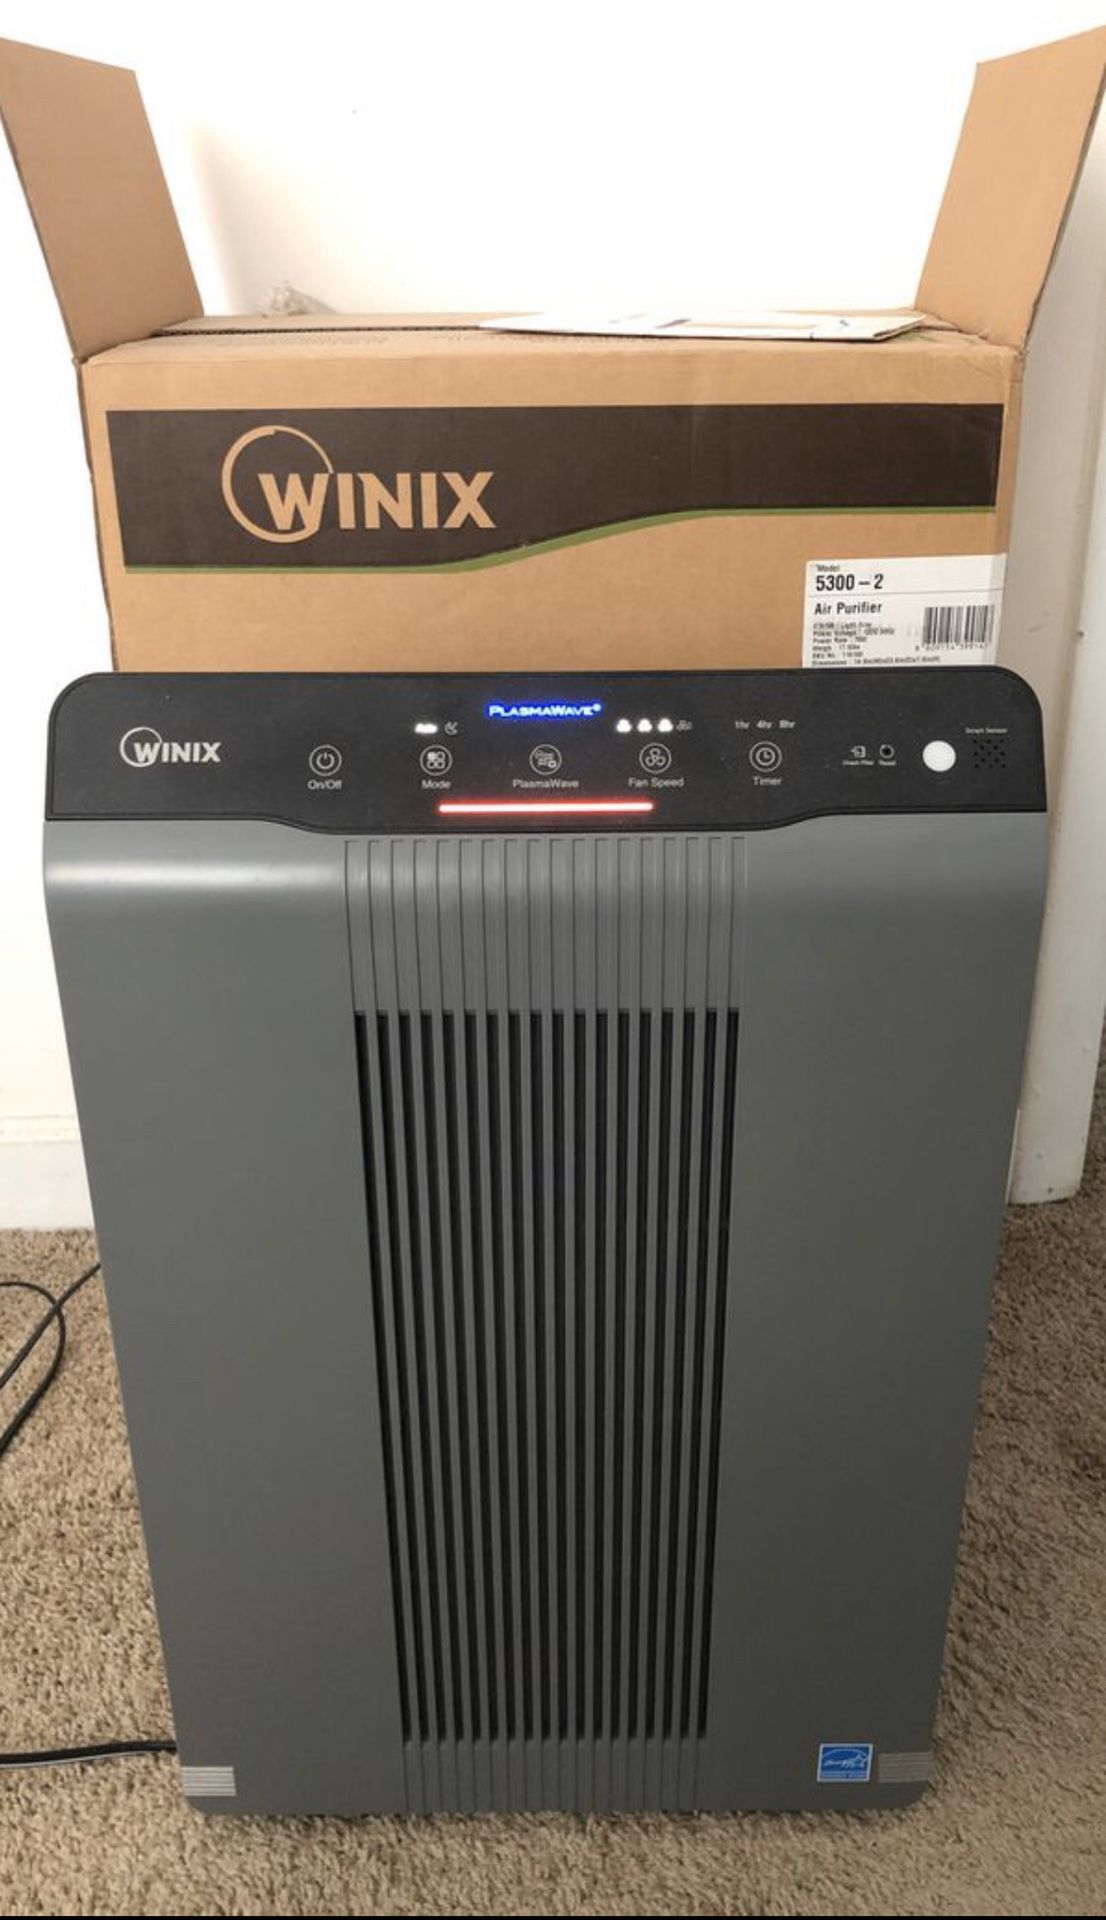 WINIX Air Purifier